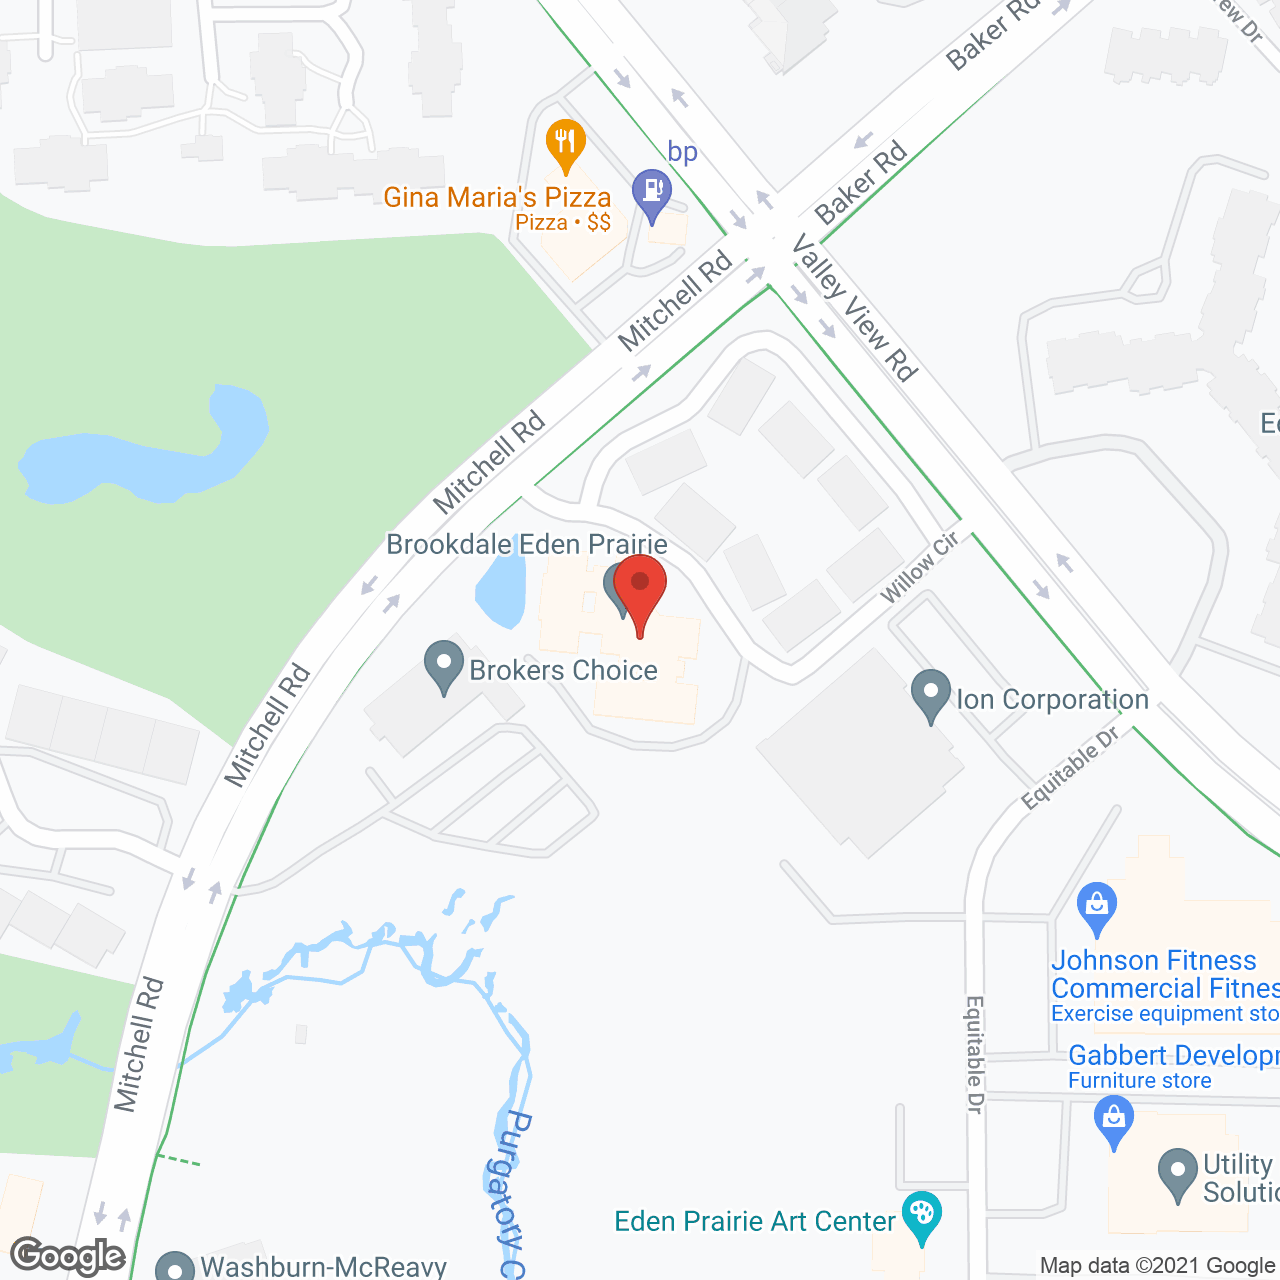 Brookdale Eden Prairie in google map